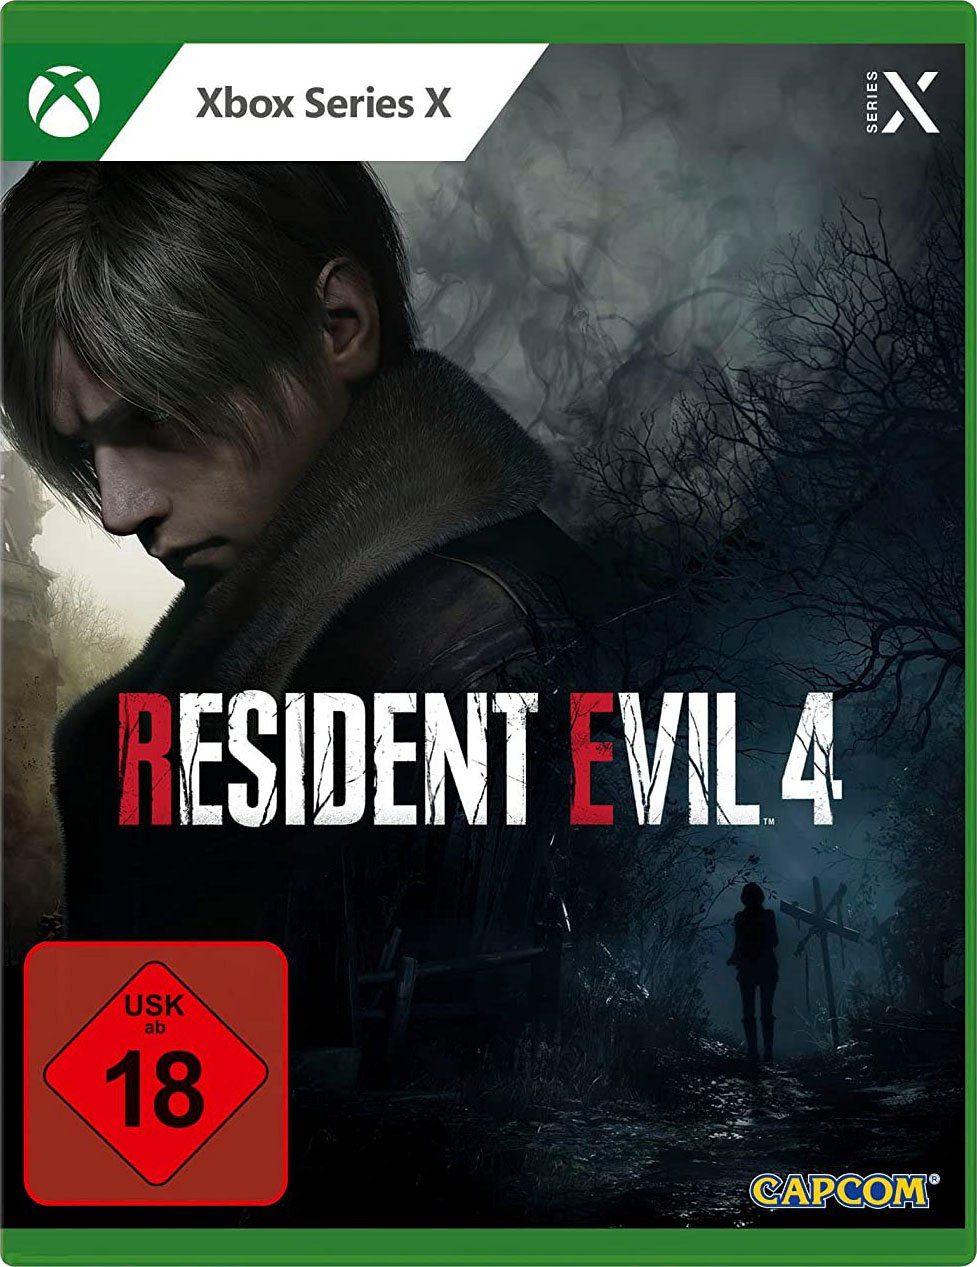 Capcom Resident Evil Series X 4 Remake Xbox